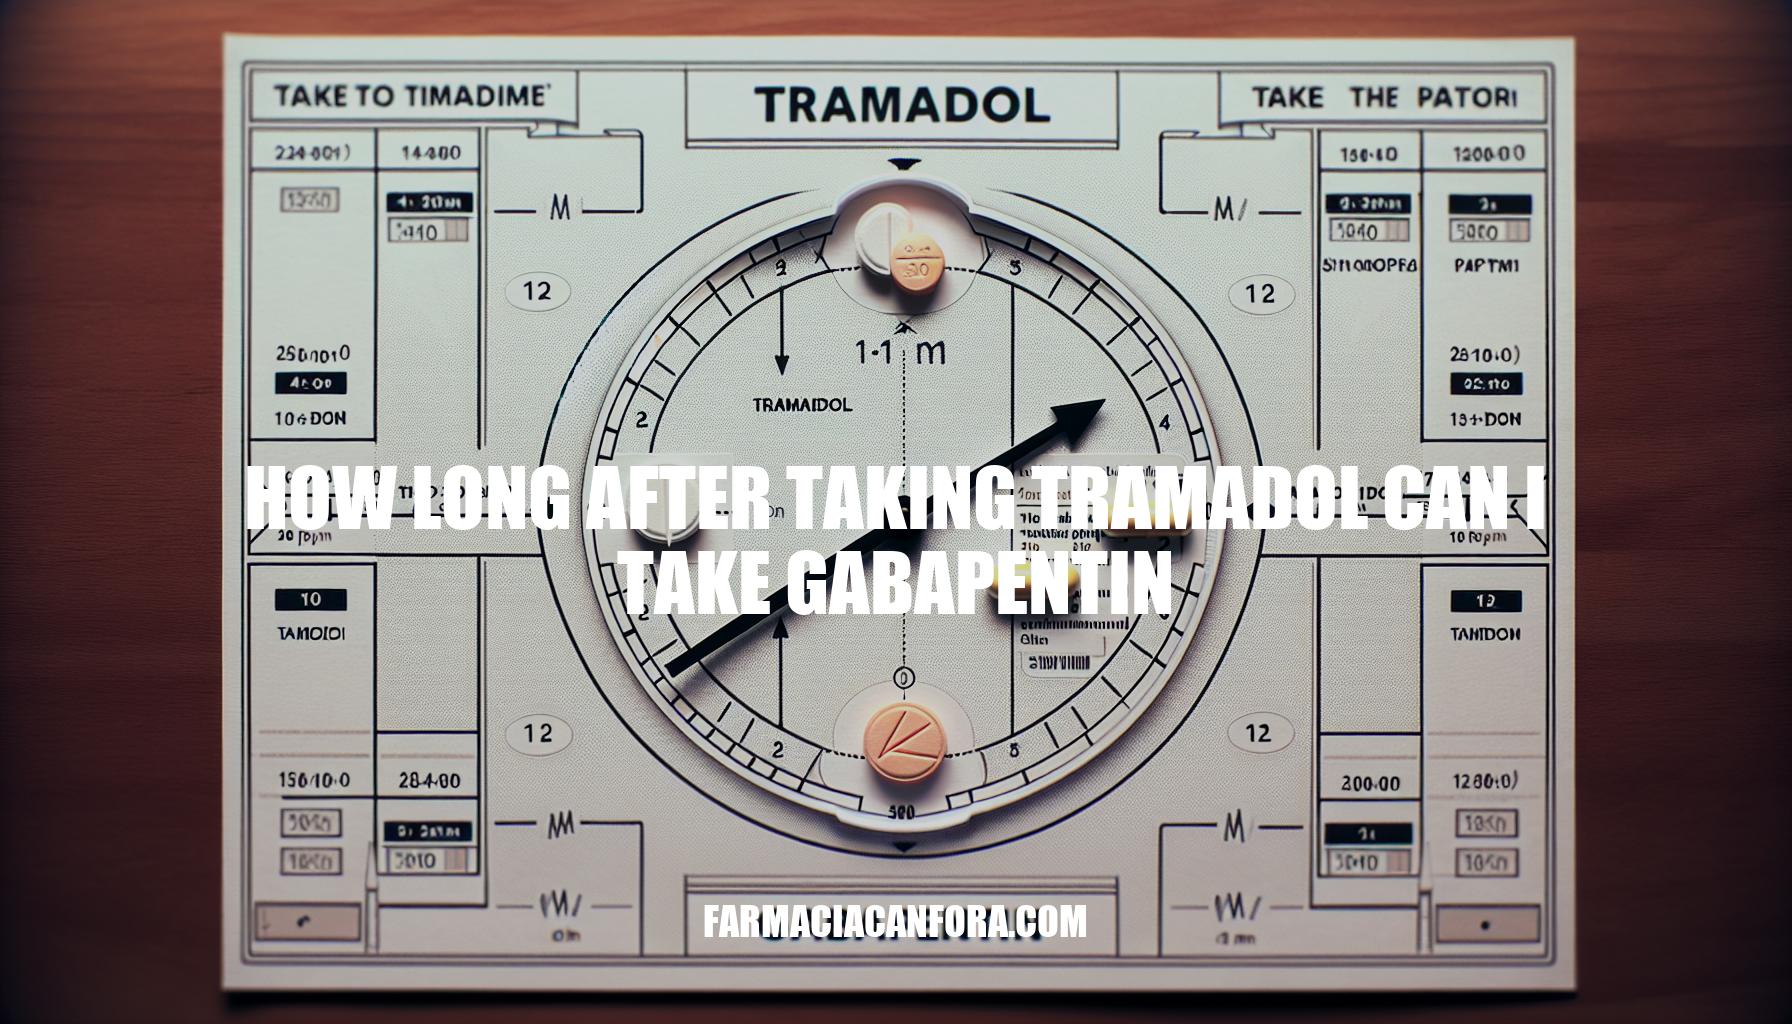 Timing Between Tramadol and Gabapentin: How Long After Taking Tramadol Can I Take Gabapentin